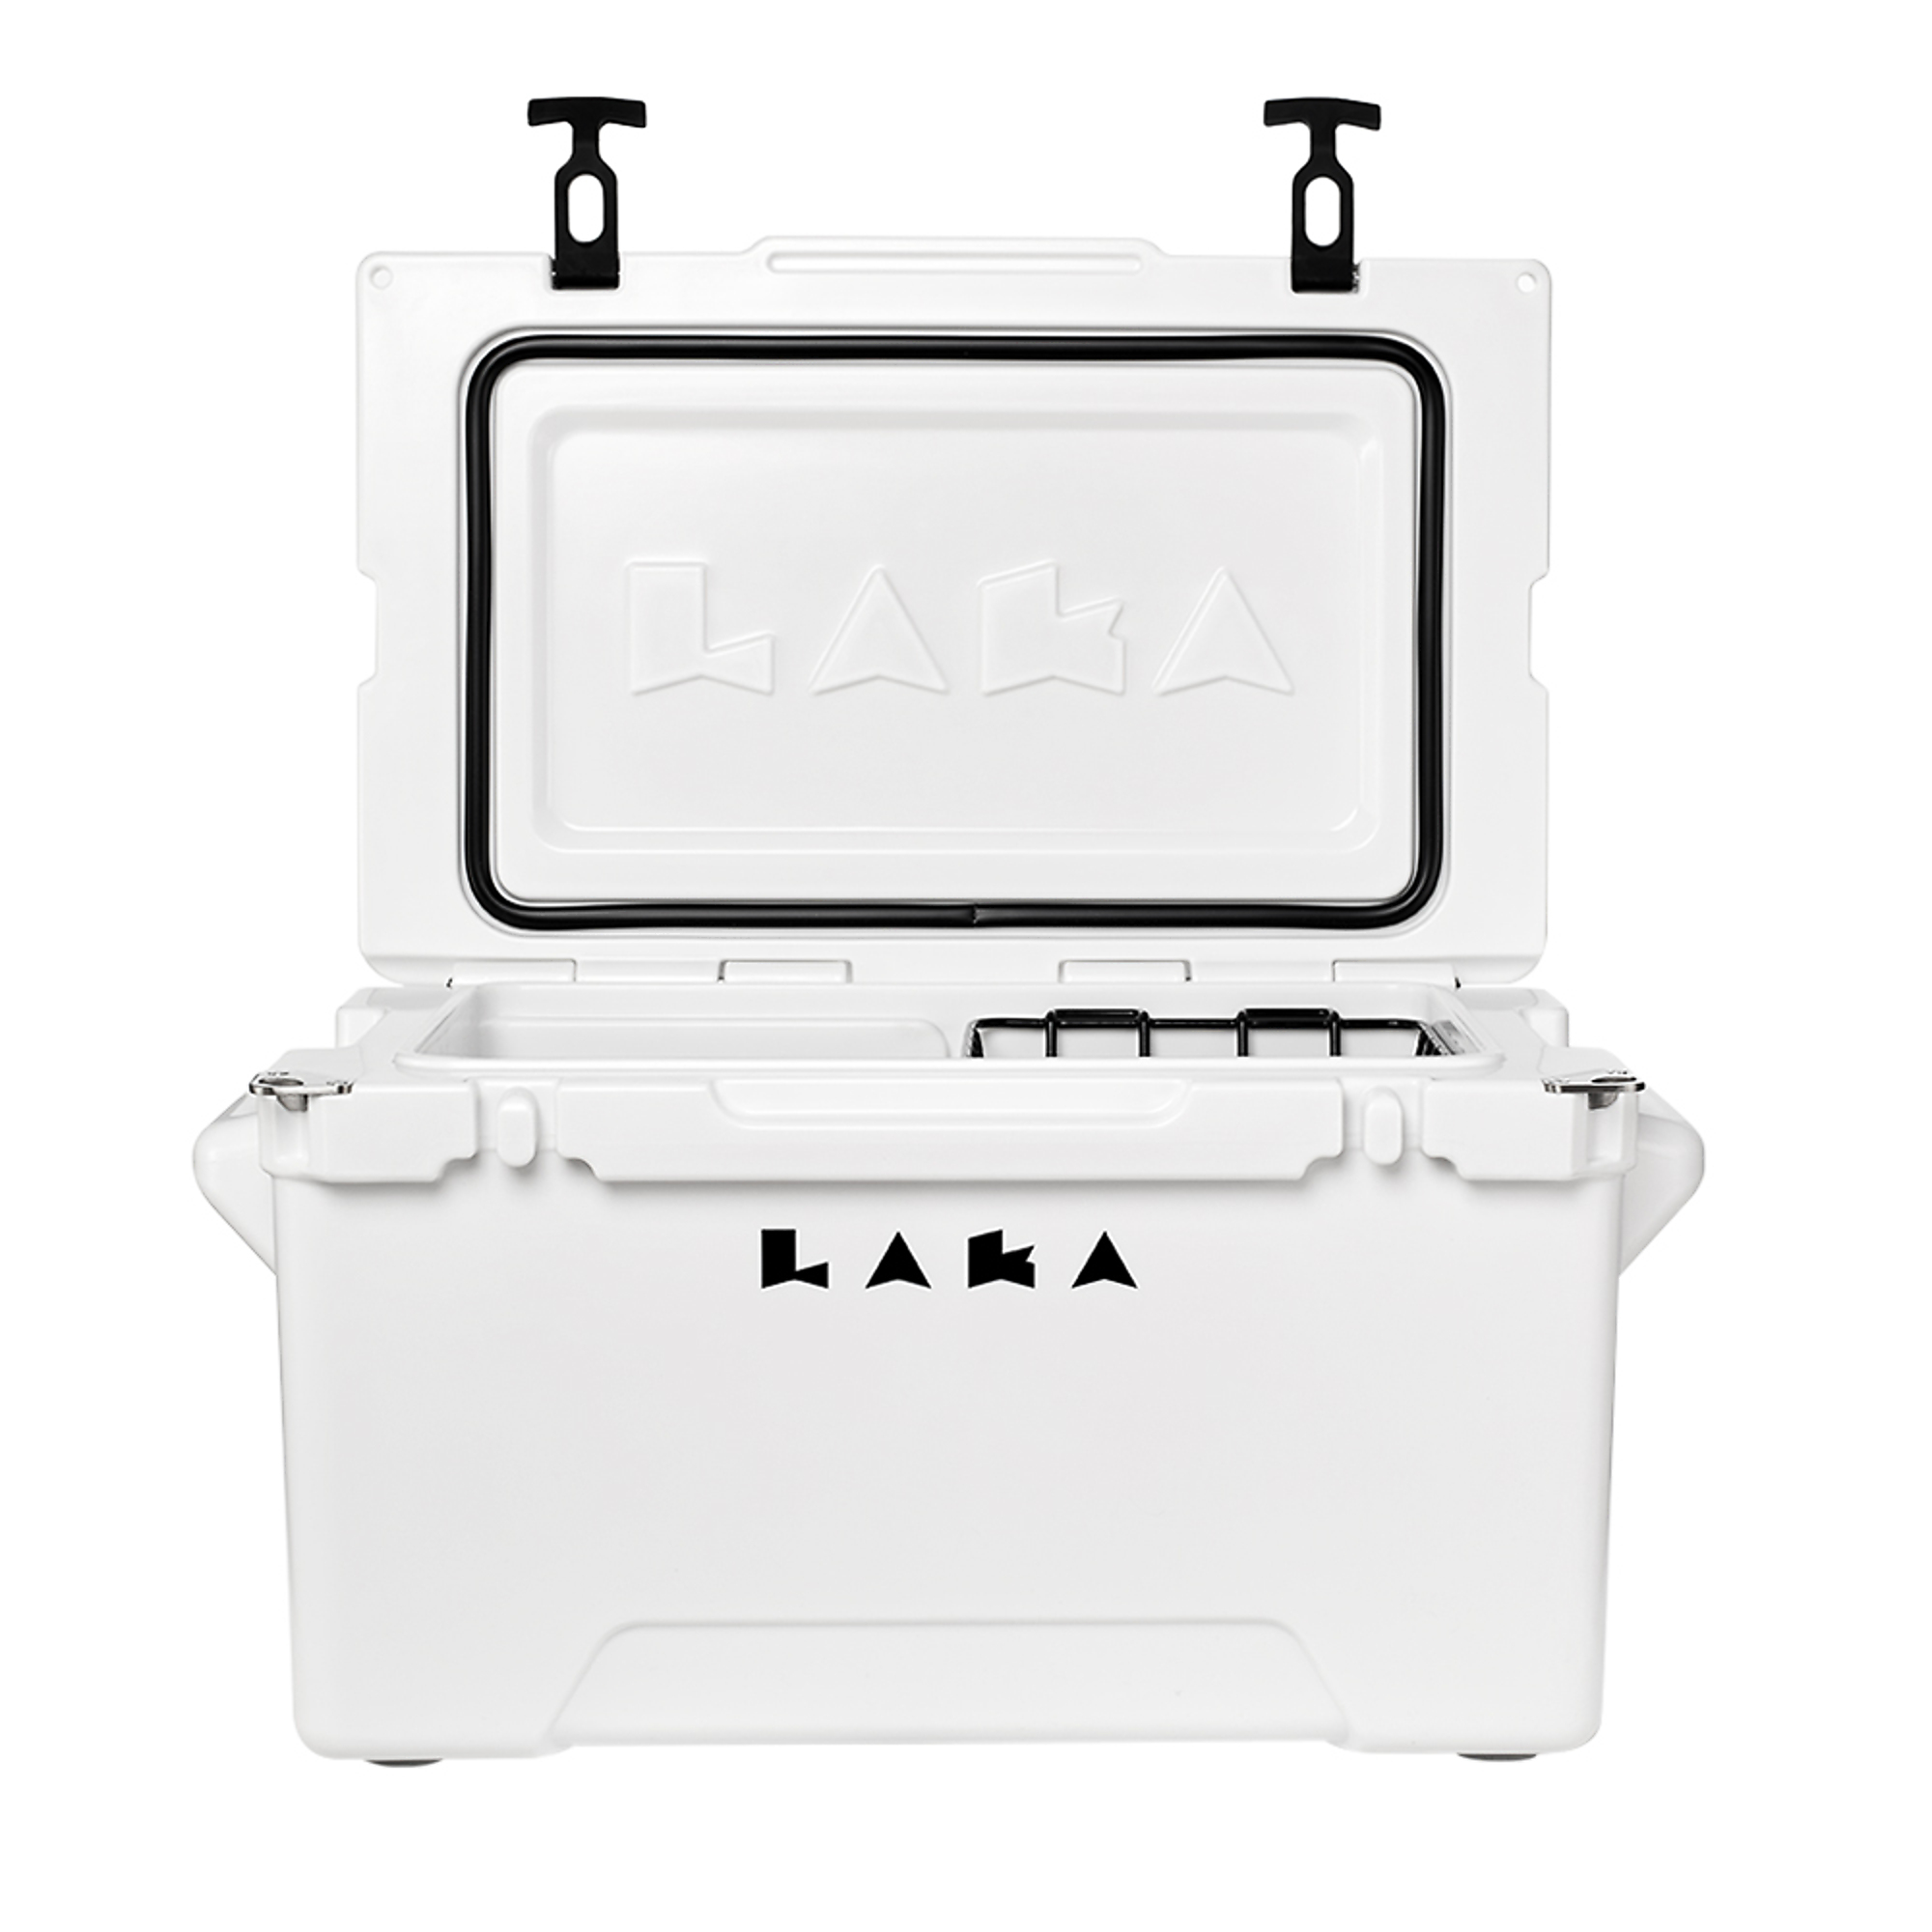 LAKA Cooler, 45 Quart Cooler - White, Capacity 11.25 Gal, Model 1013